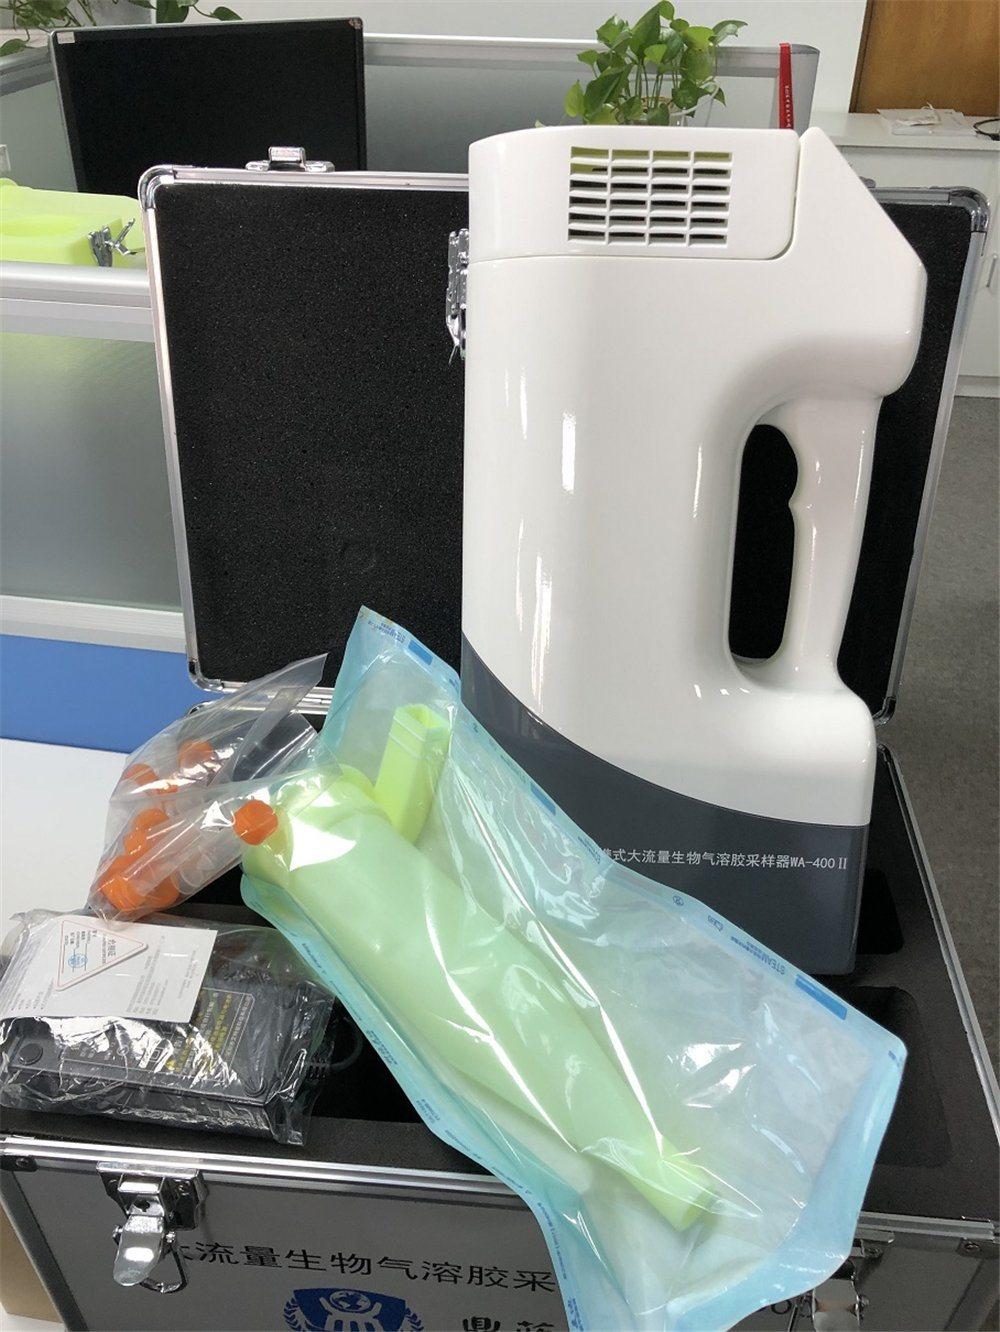 Portable High-Flow Bioaerosol Sampler Wa-400II for Virus Gas Air Sampler